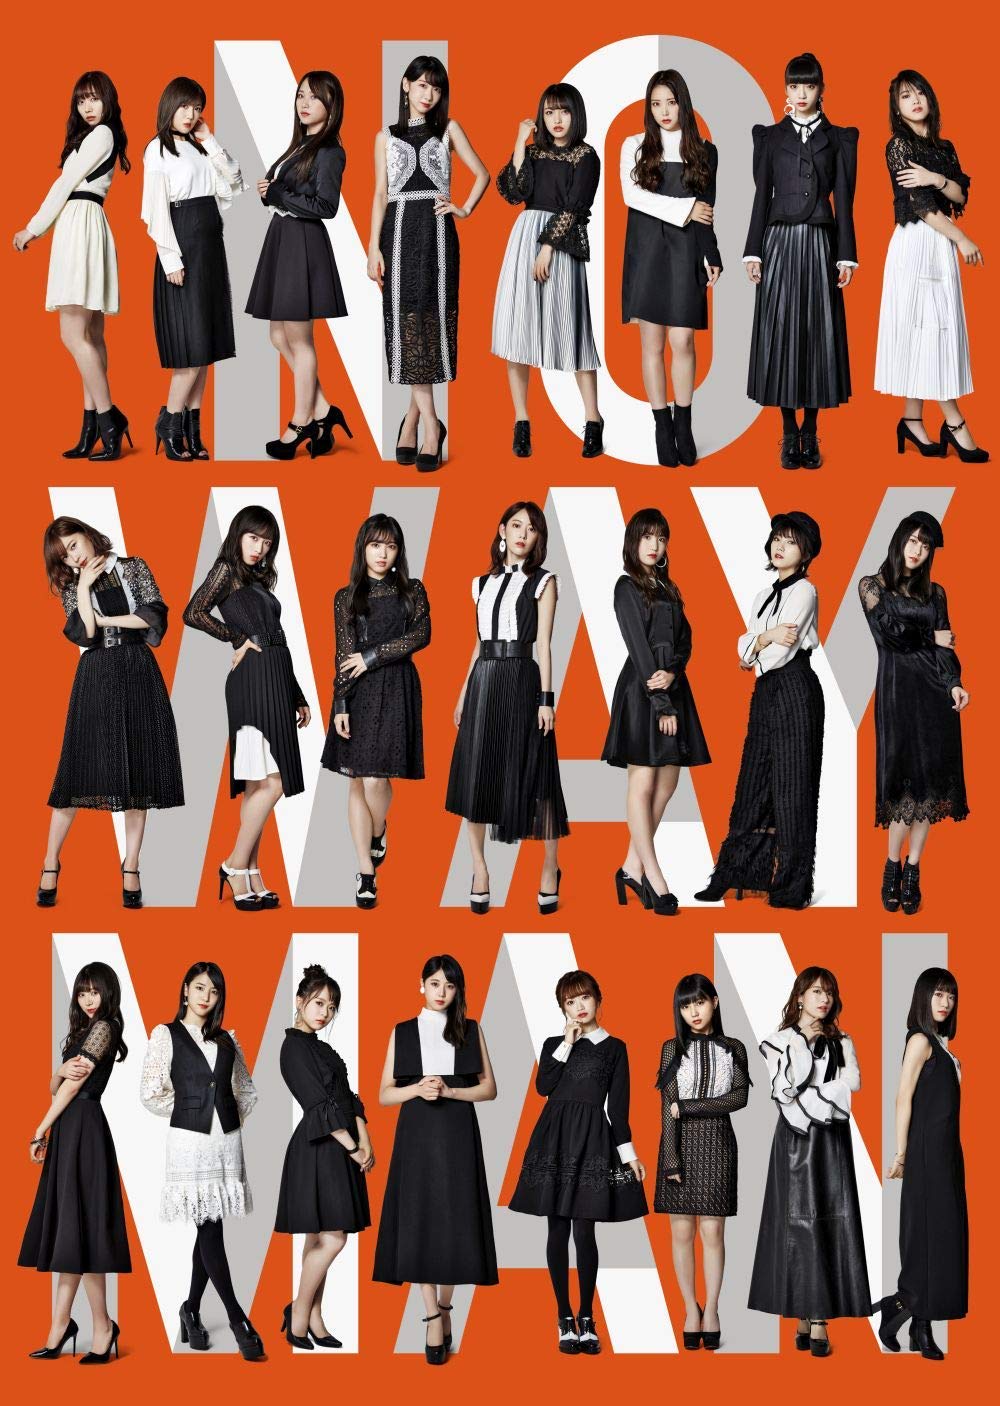 AKB48/54thシングル「NO WAY MAN｣（CD+DVD）Type-D【初回限定盤】（ラムタラ特典